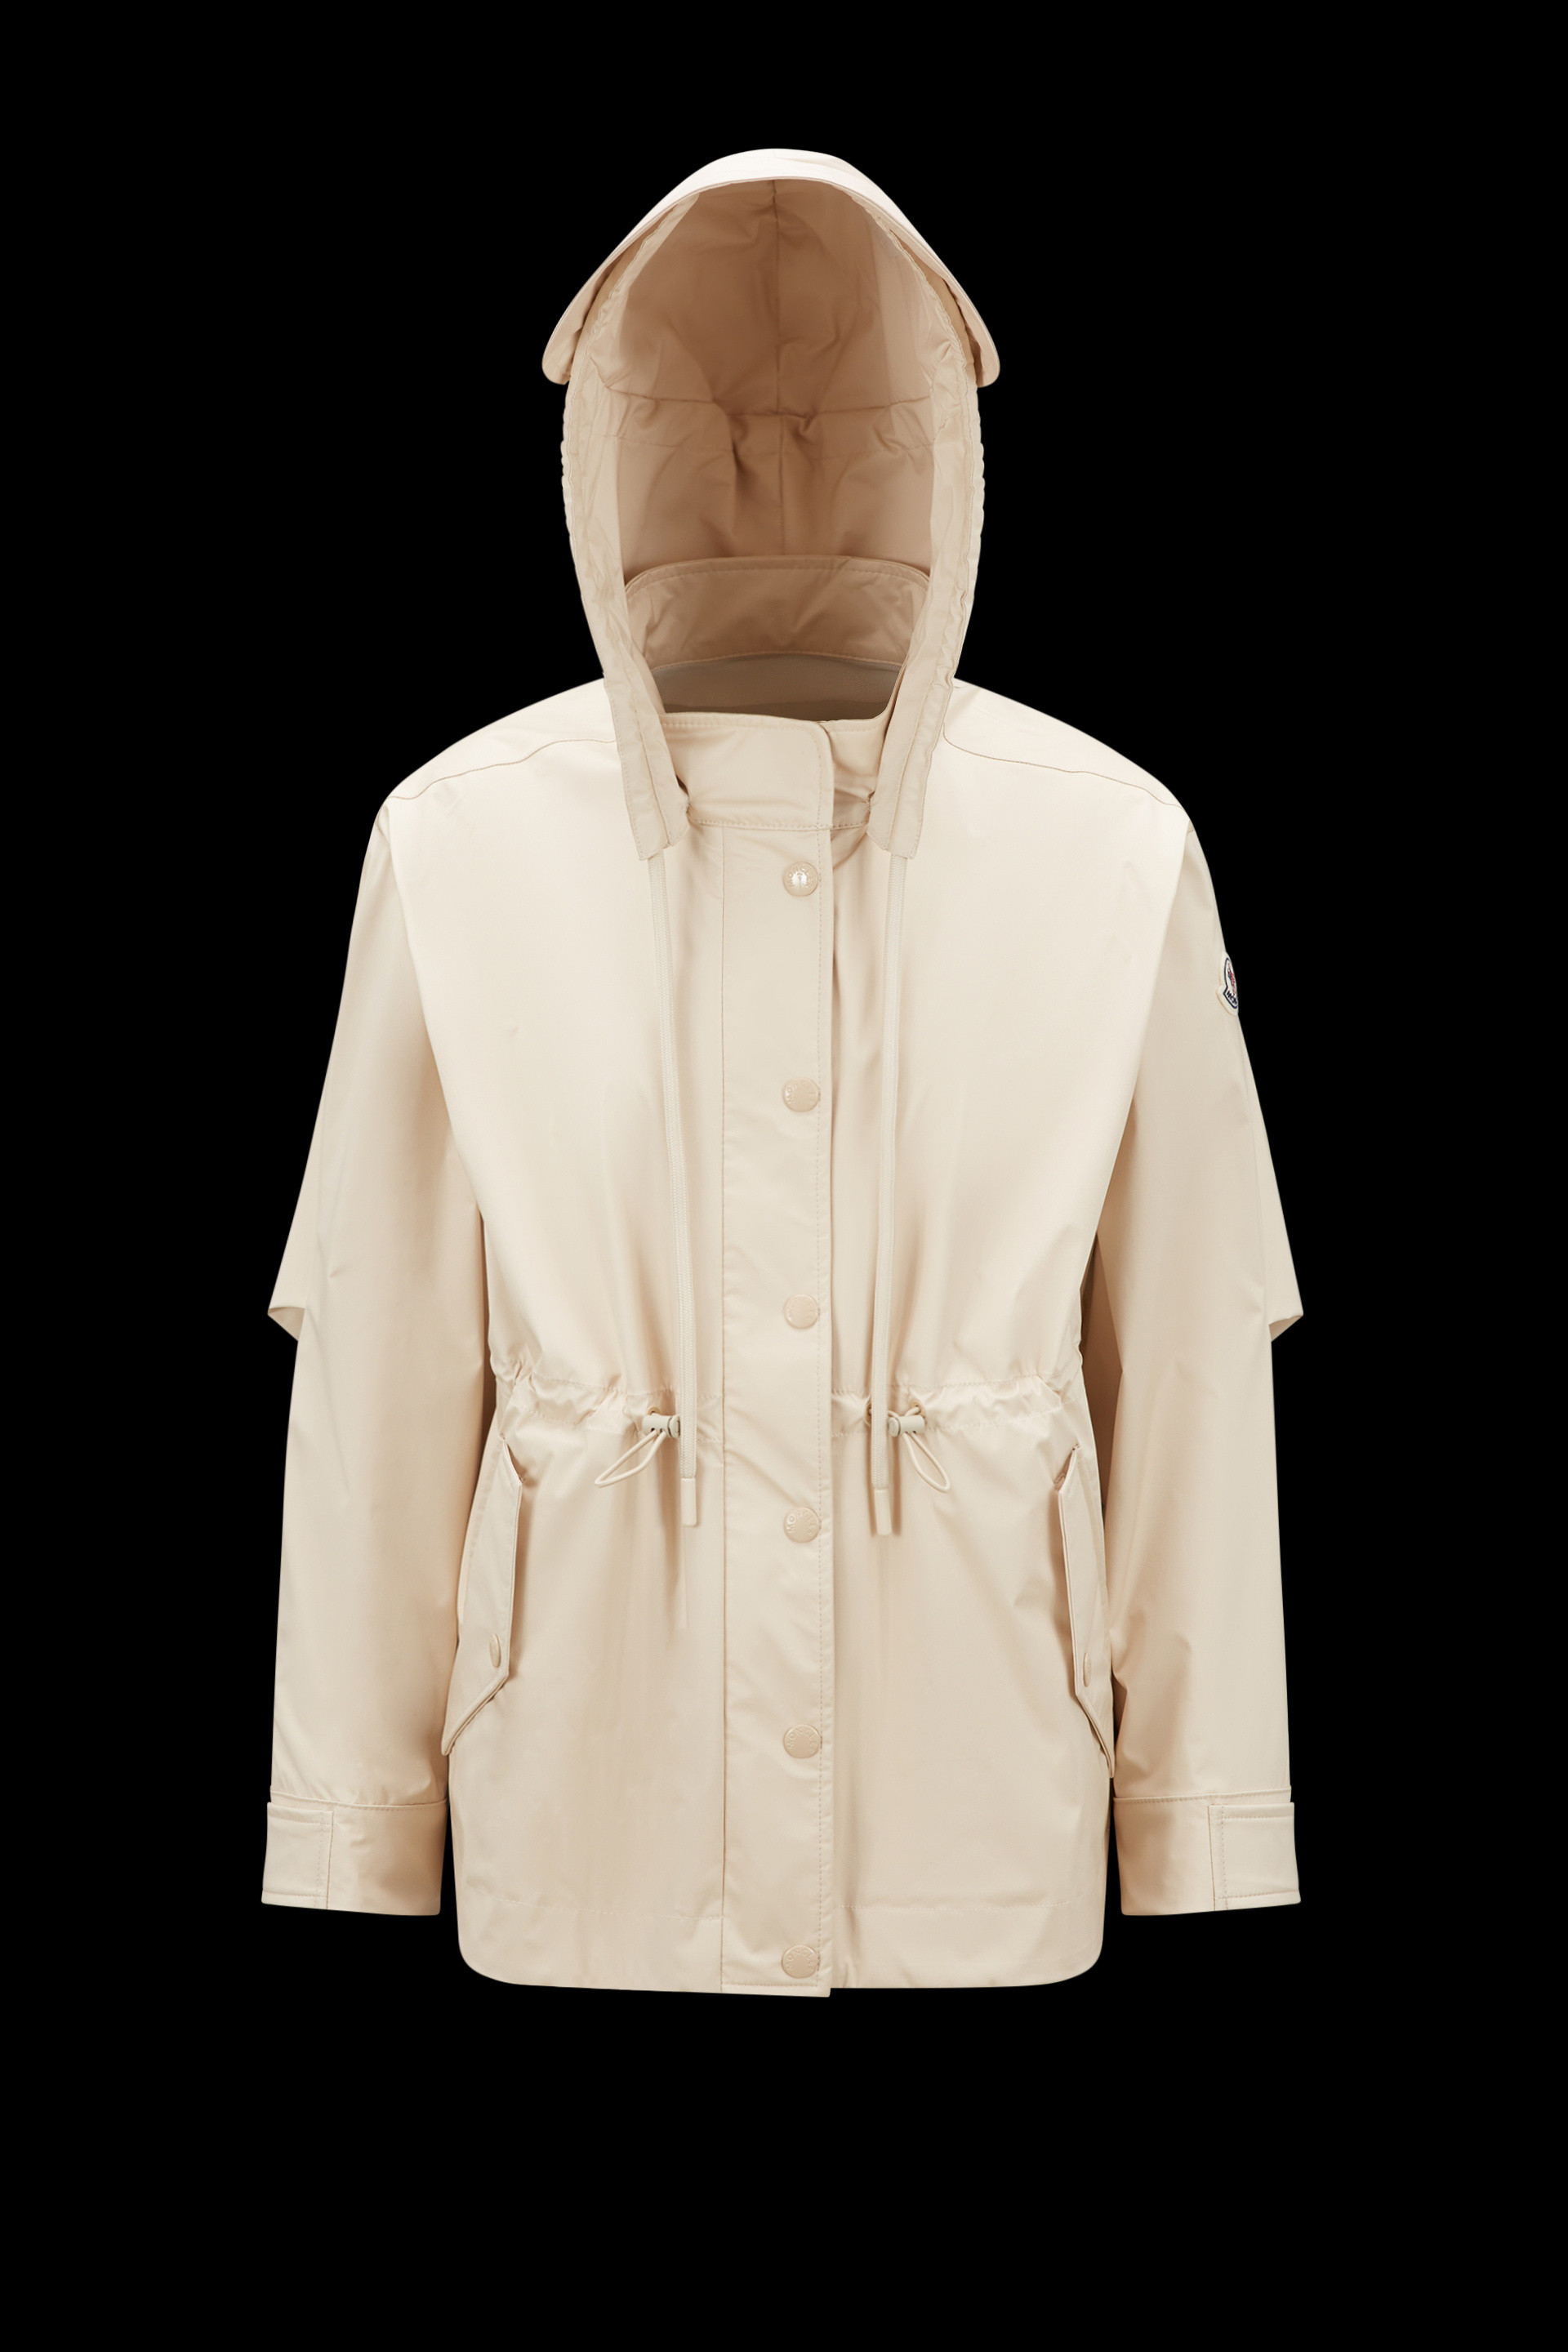 Penelope wiel rekken Moncler Netherlands Online Shop — Down jackets and clothing